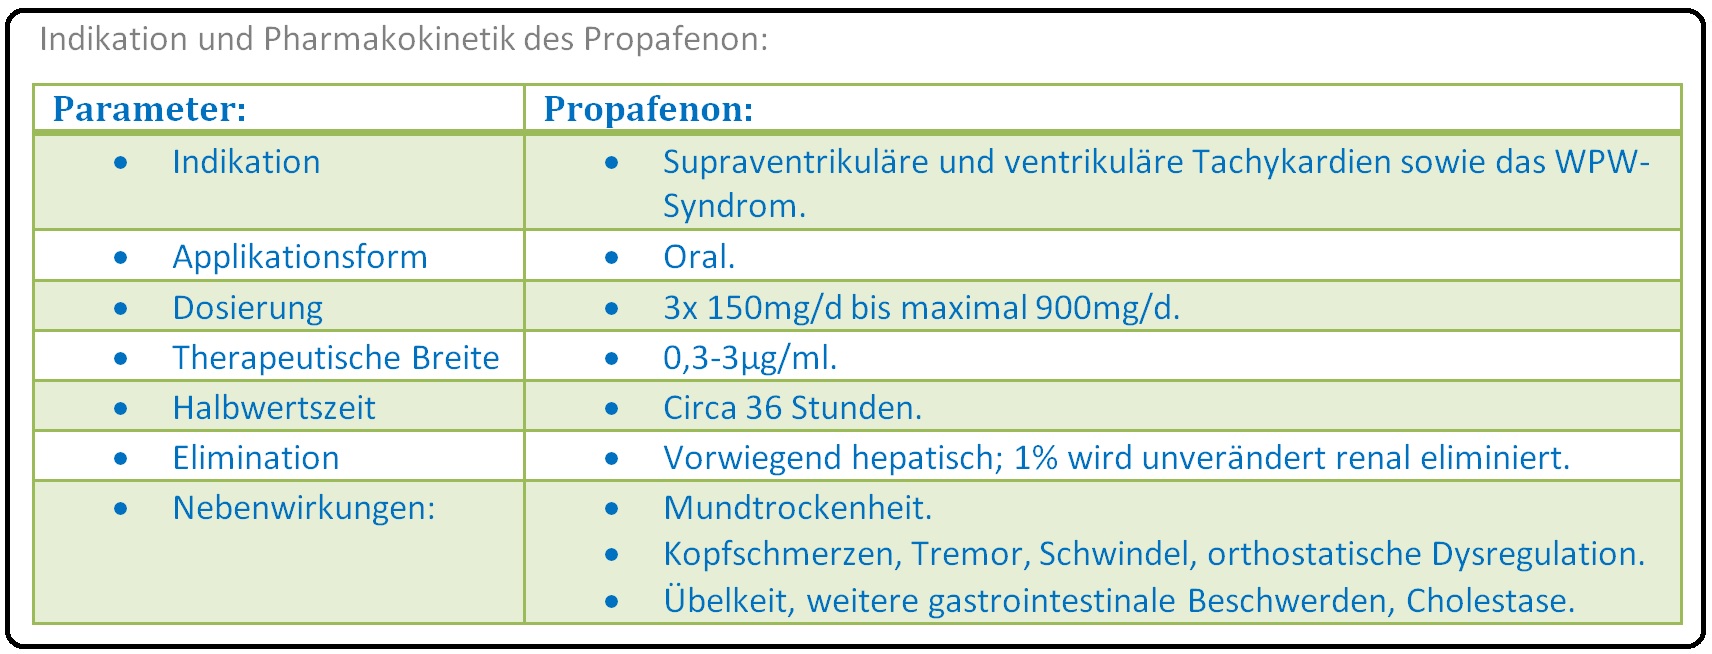 071 Indikation und Pharmakokinetik des Propafenon